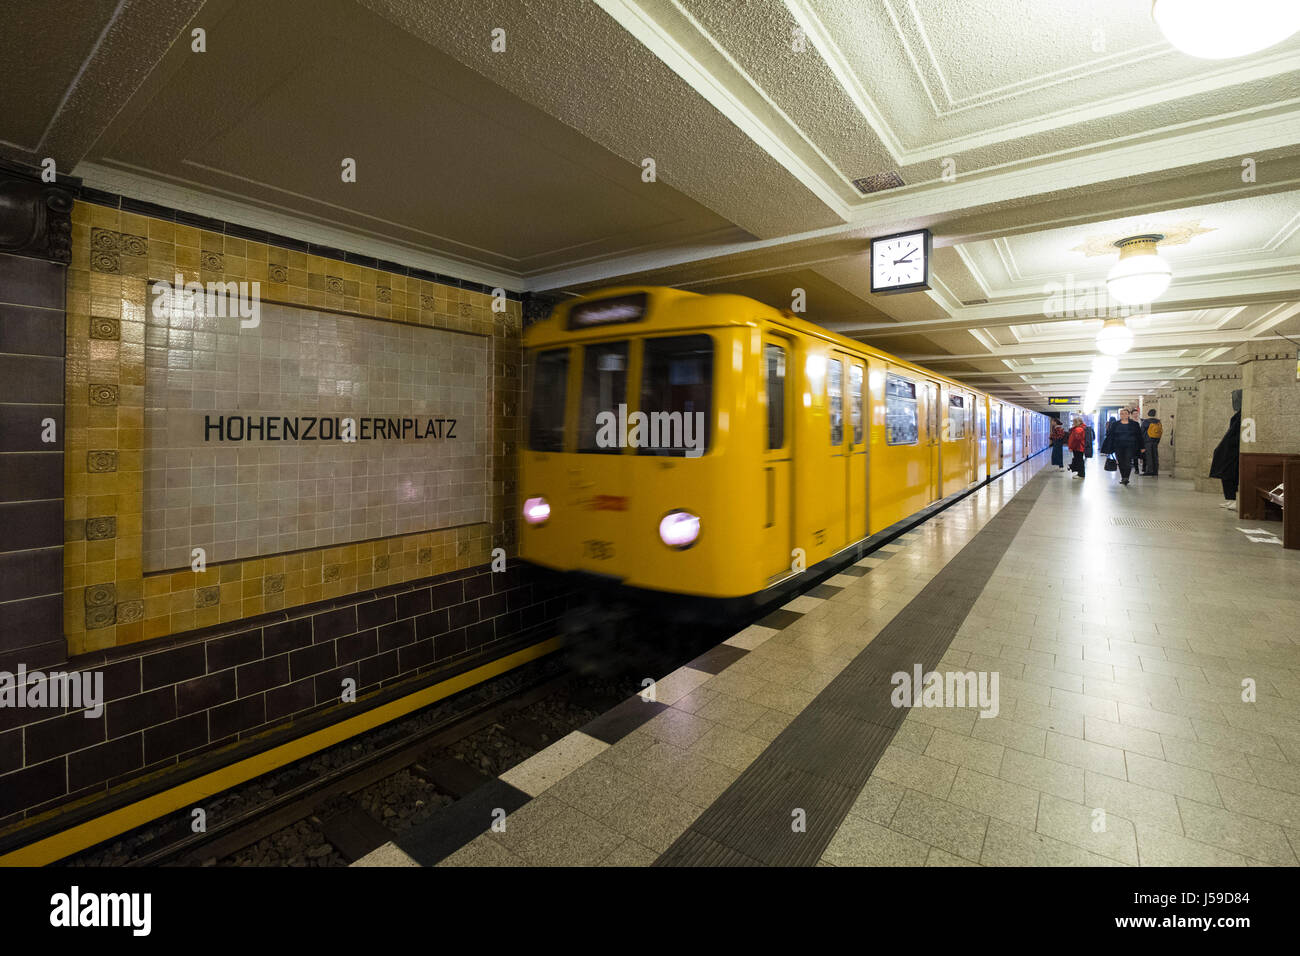 Train at Hohenzollernplatz U-Bahn underground railway station in Berlin, Germany Stock Photo